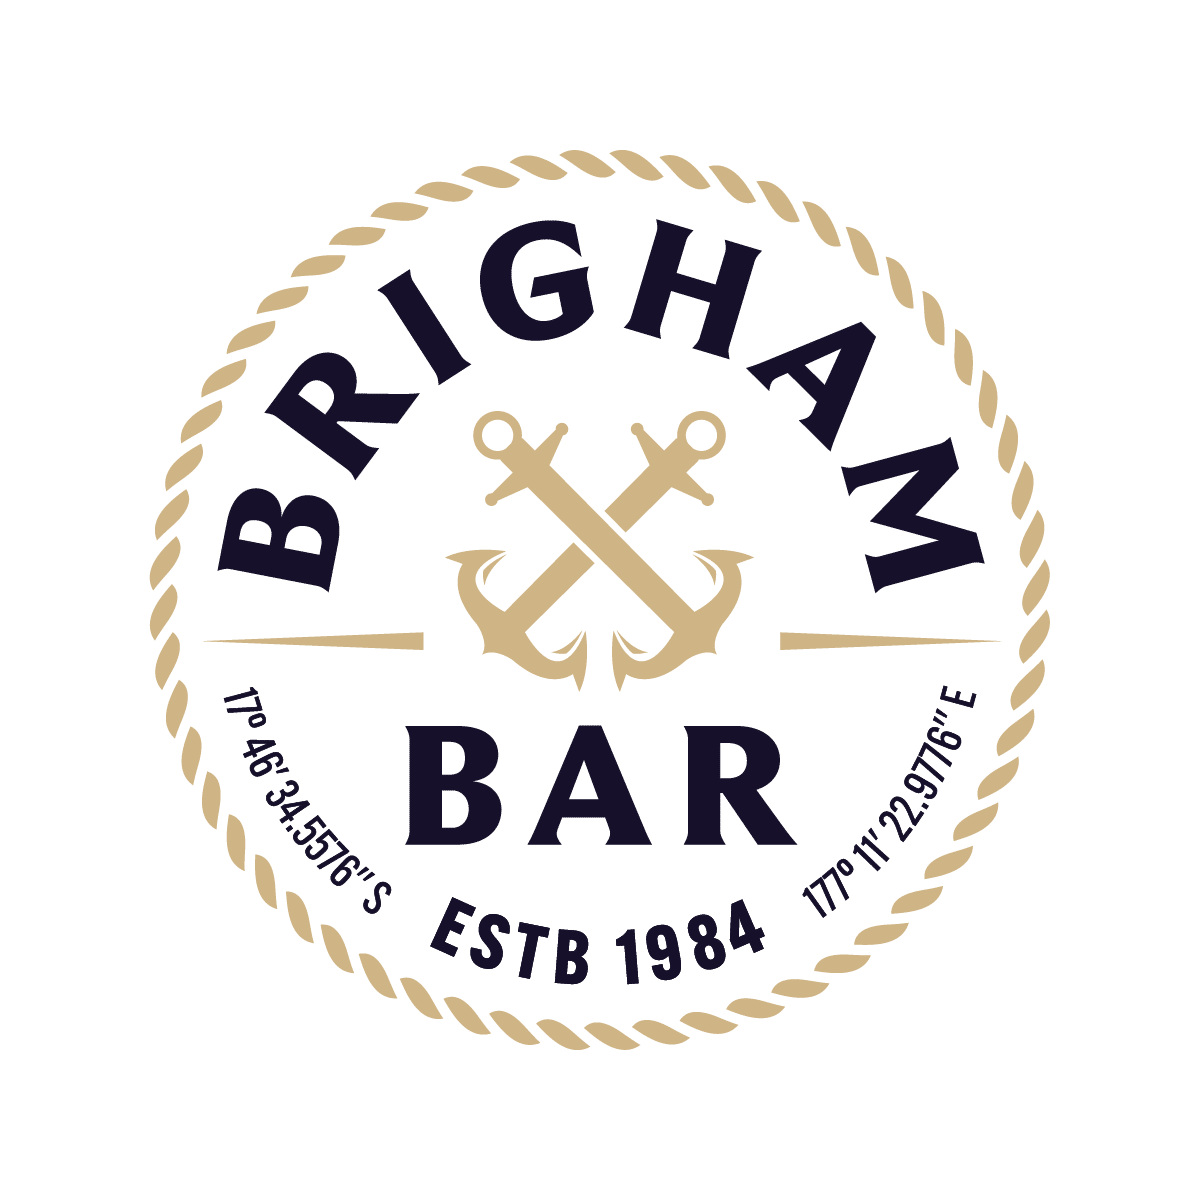 A Brigham bar logo with an anchor icon